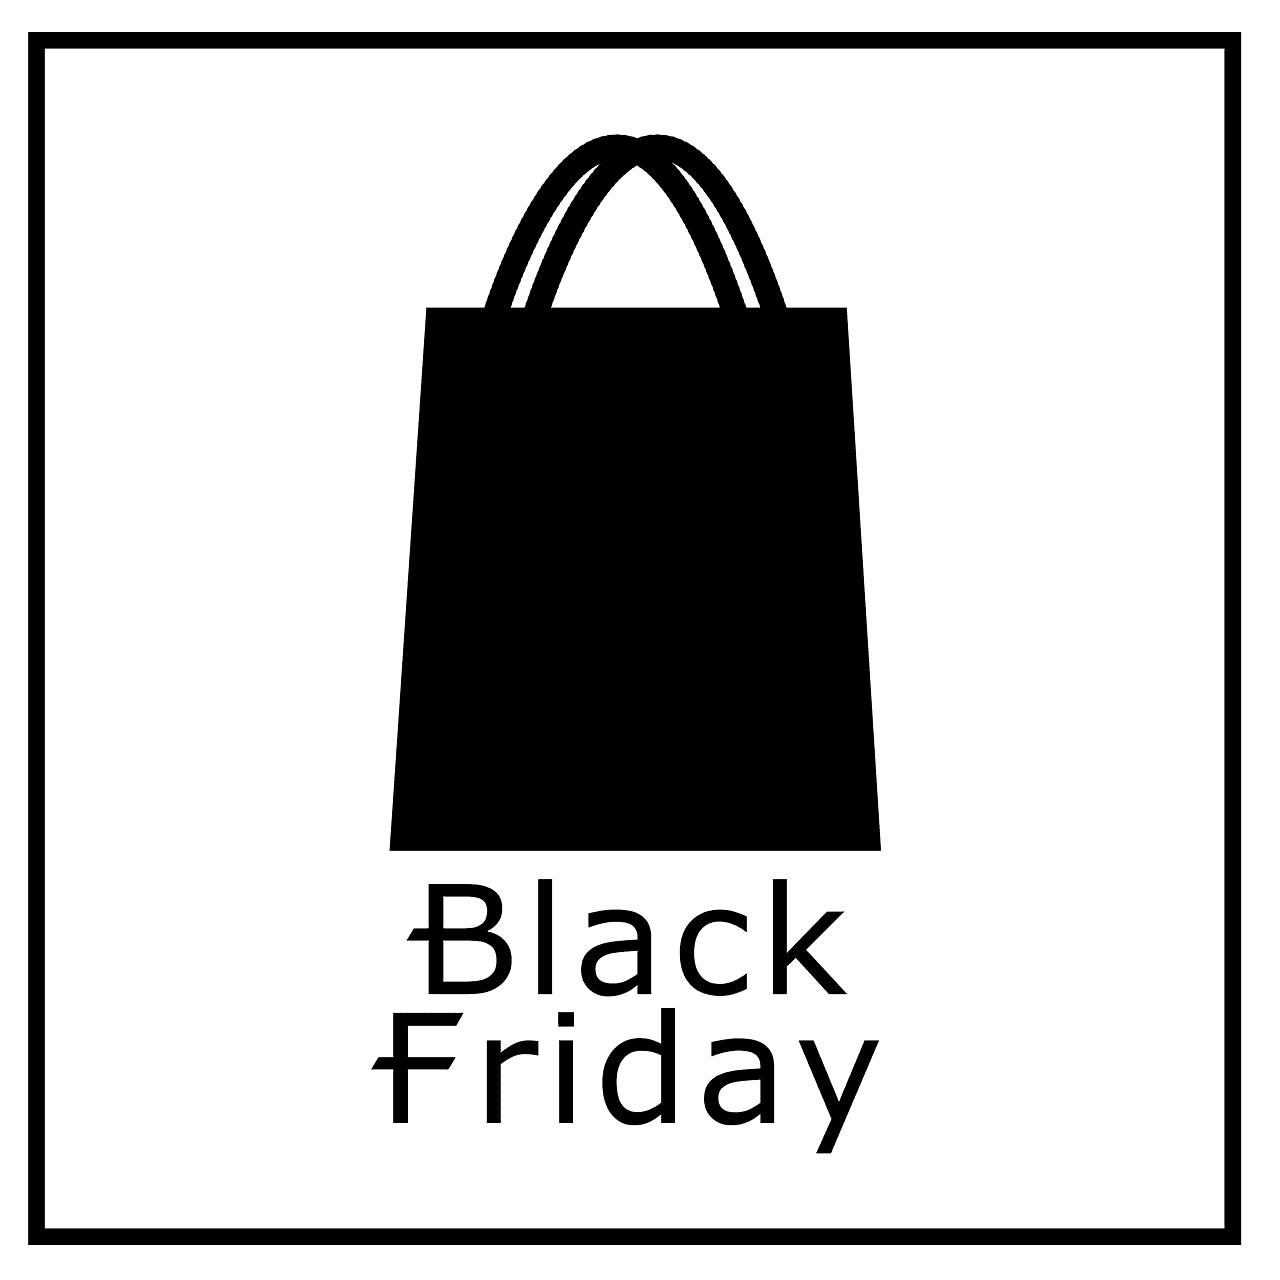 Black Friday shopping bag